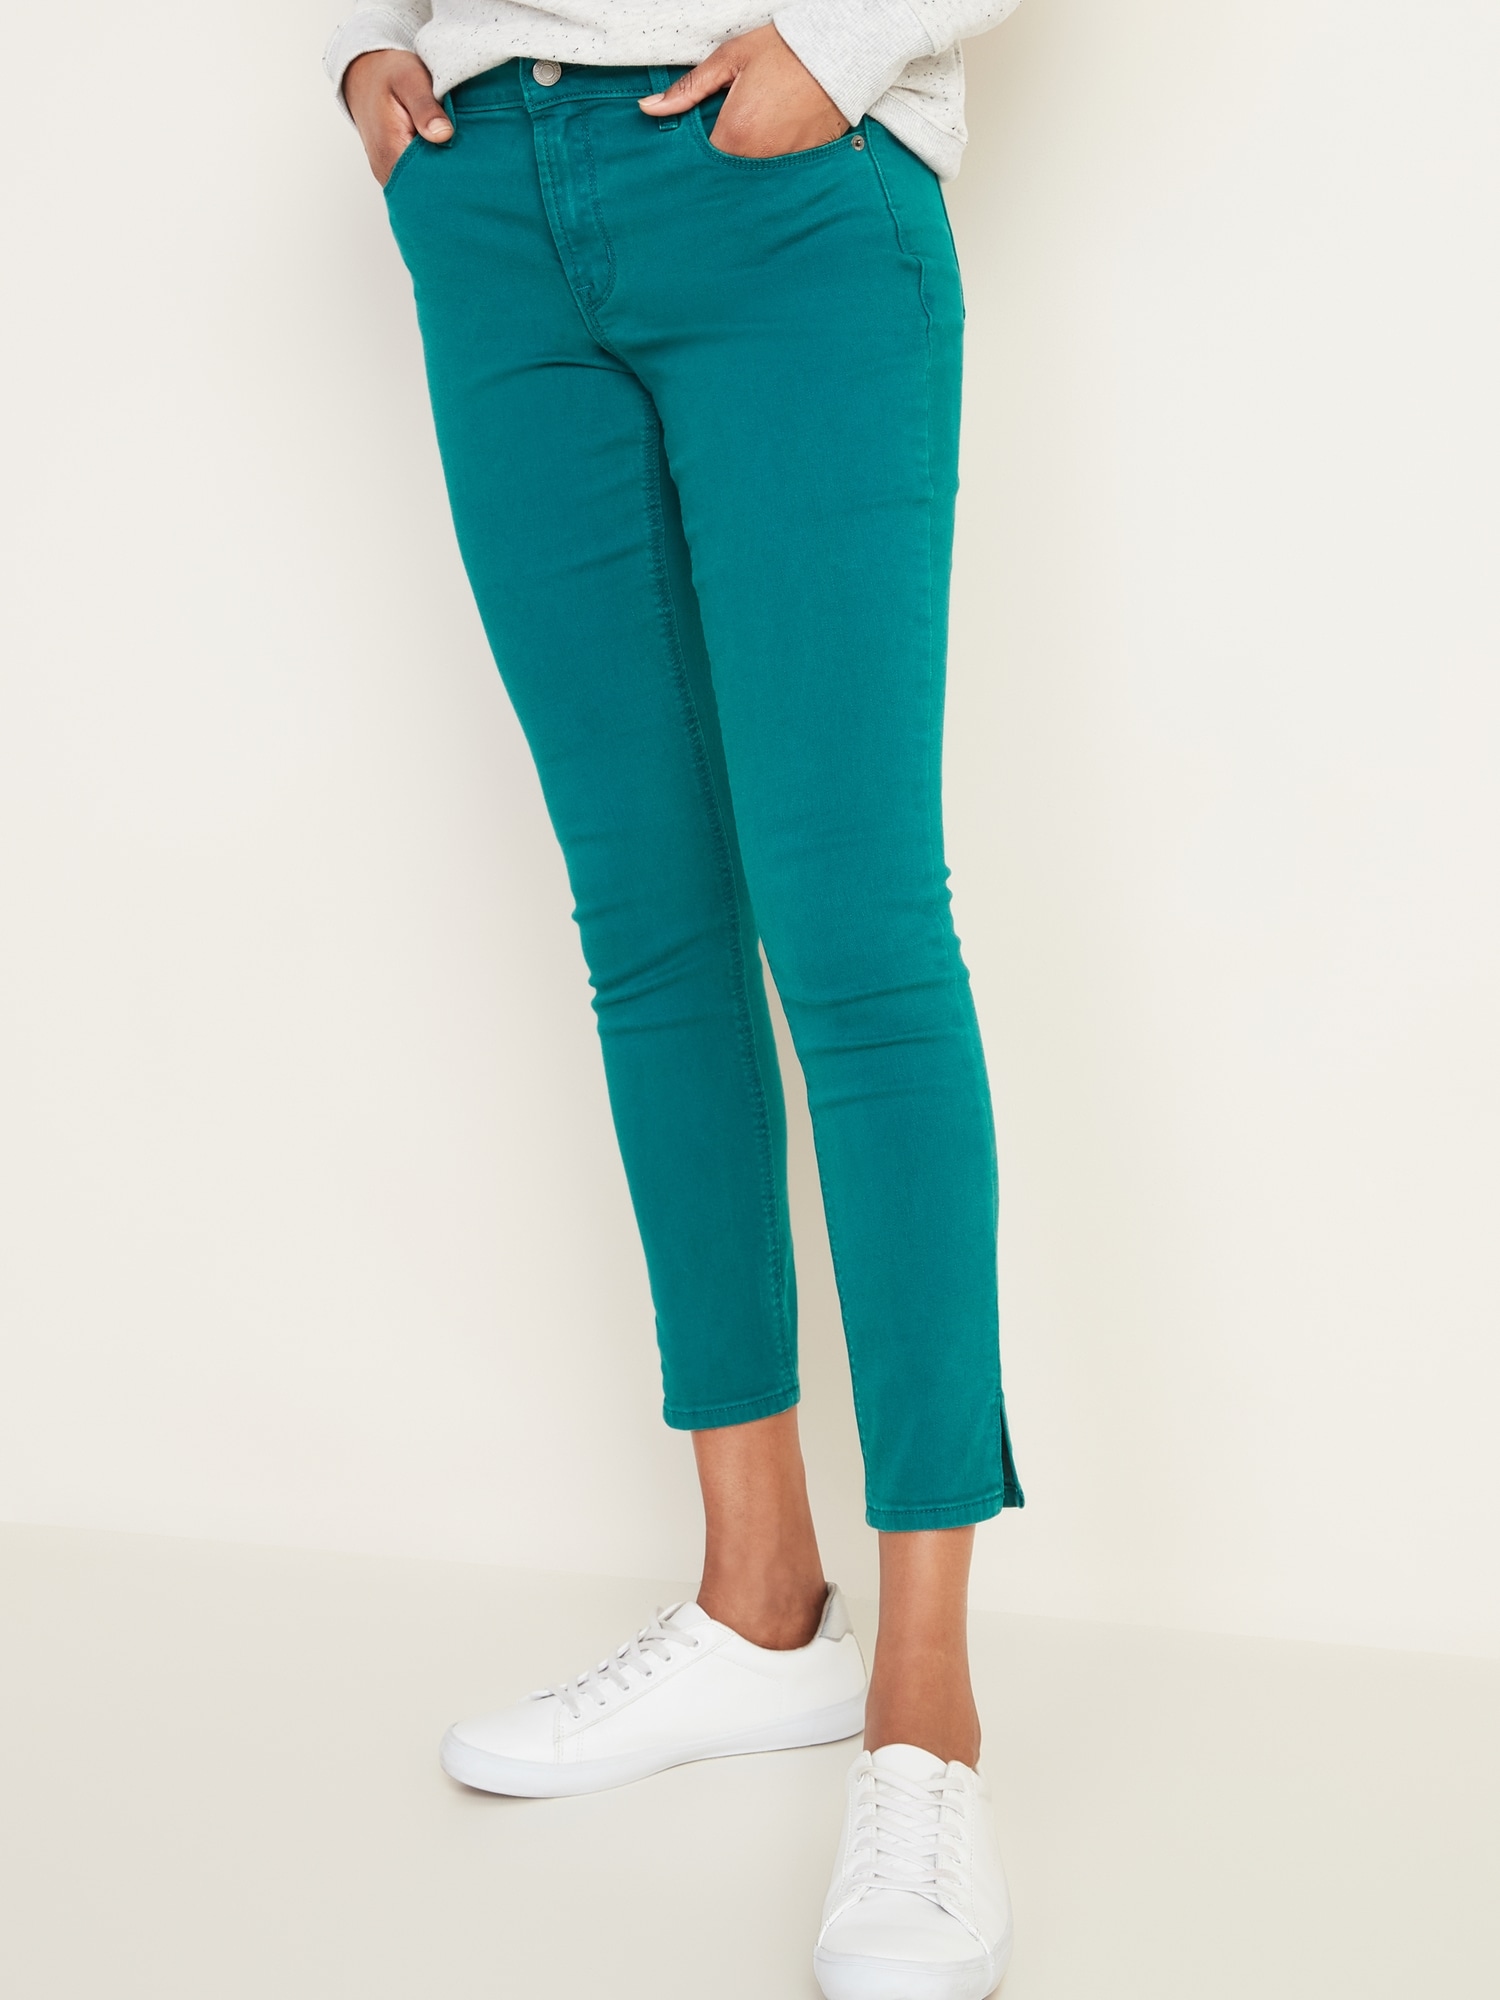 emerald green skinny jeans womens